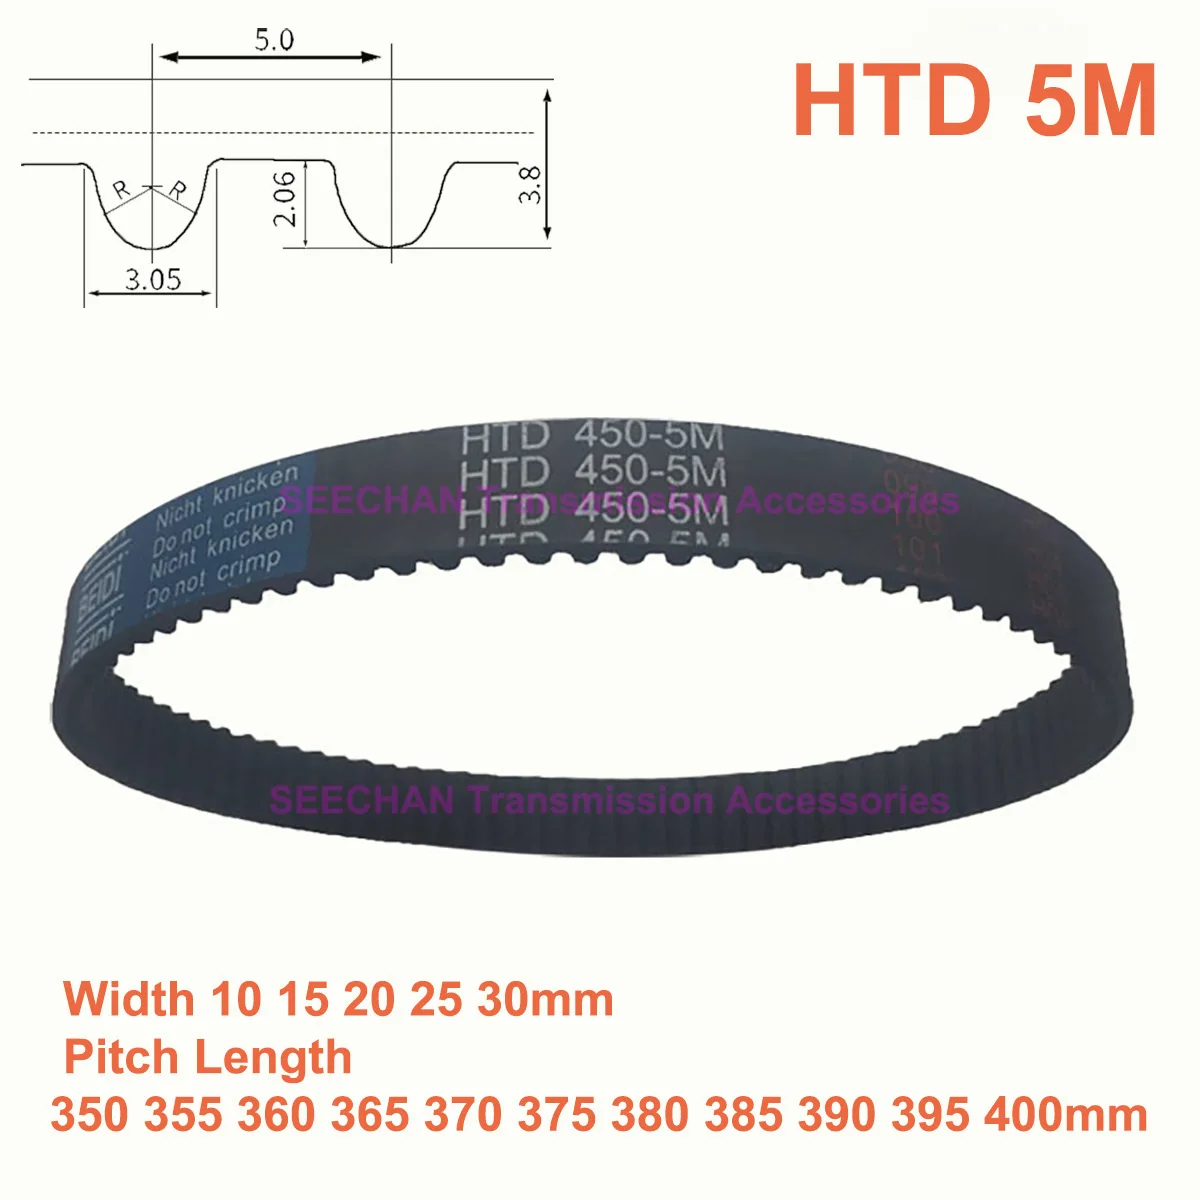 

HTD 5M Rubber Timing Belt Width 10 15 20 25 30mm Synchronous Belt Pitch Length 350 355 360 365 370 375 380 385 390 395 400mm